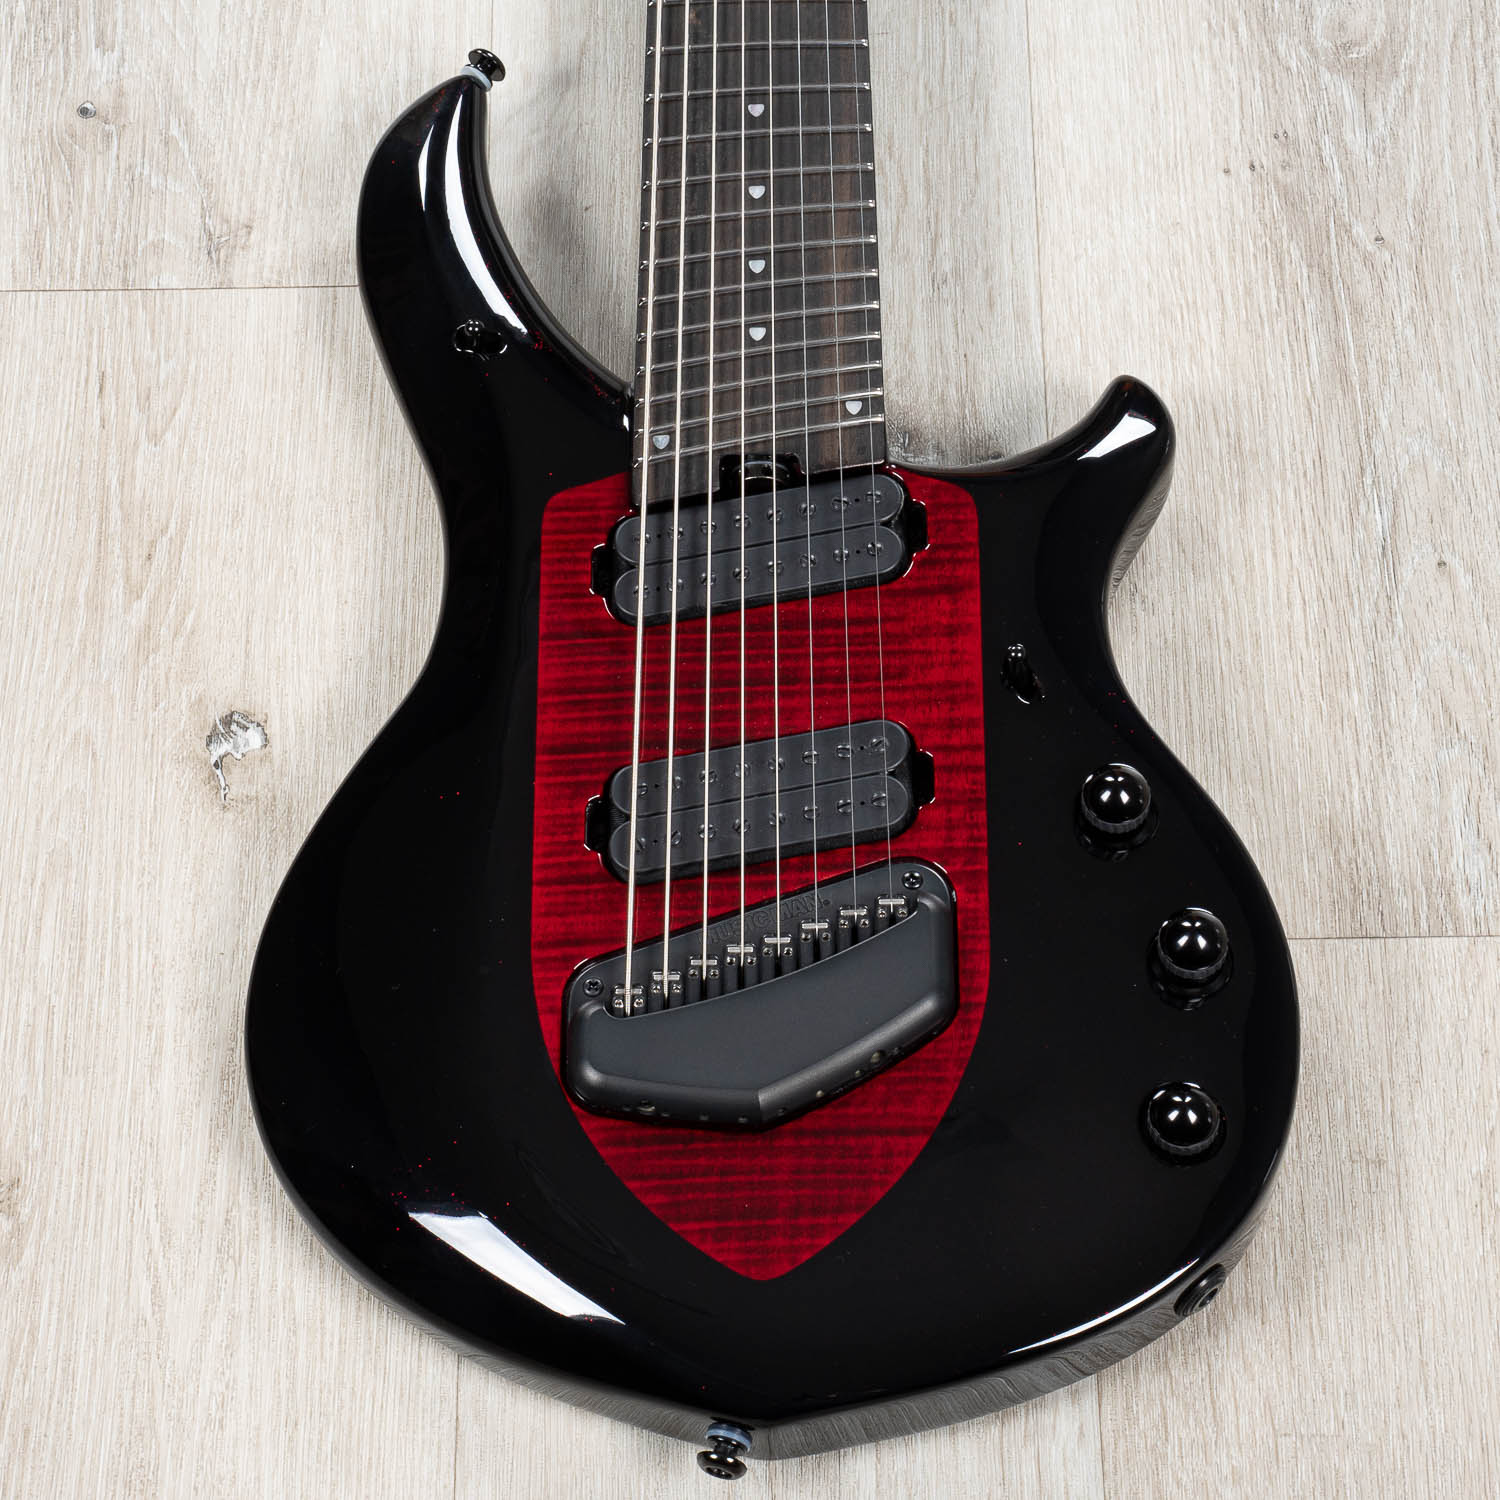 Ernie Ball Music Man John Petrucci Majesty 8-String Electric Guitar (Sanguine Red) $2855.19